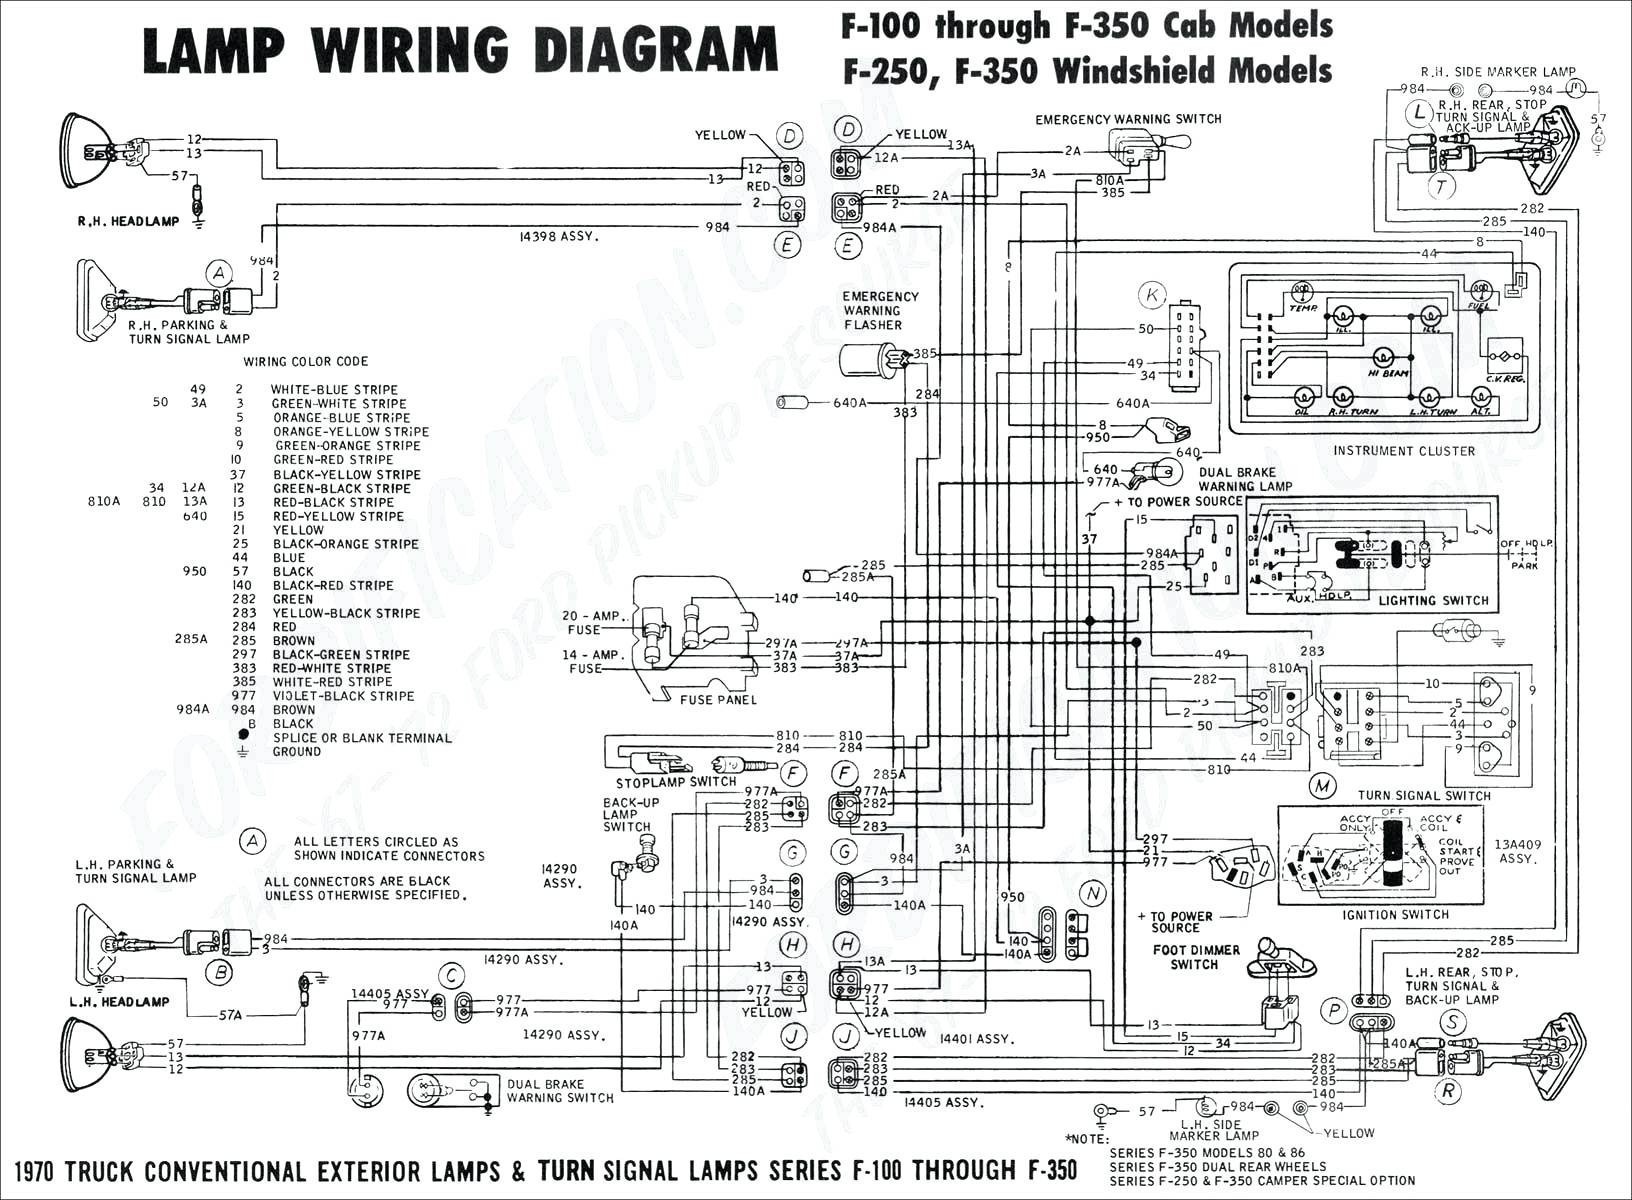 Basic Air Brake System Diagram 1999 Mustang 3 8 Engine Fuel Line Diagram Wiring Diagram Paper Of Basic Air Brake System Diagram